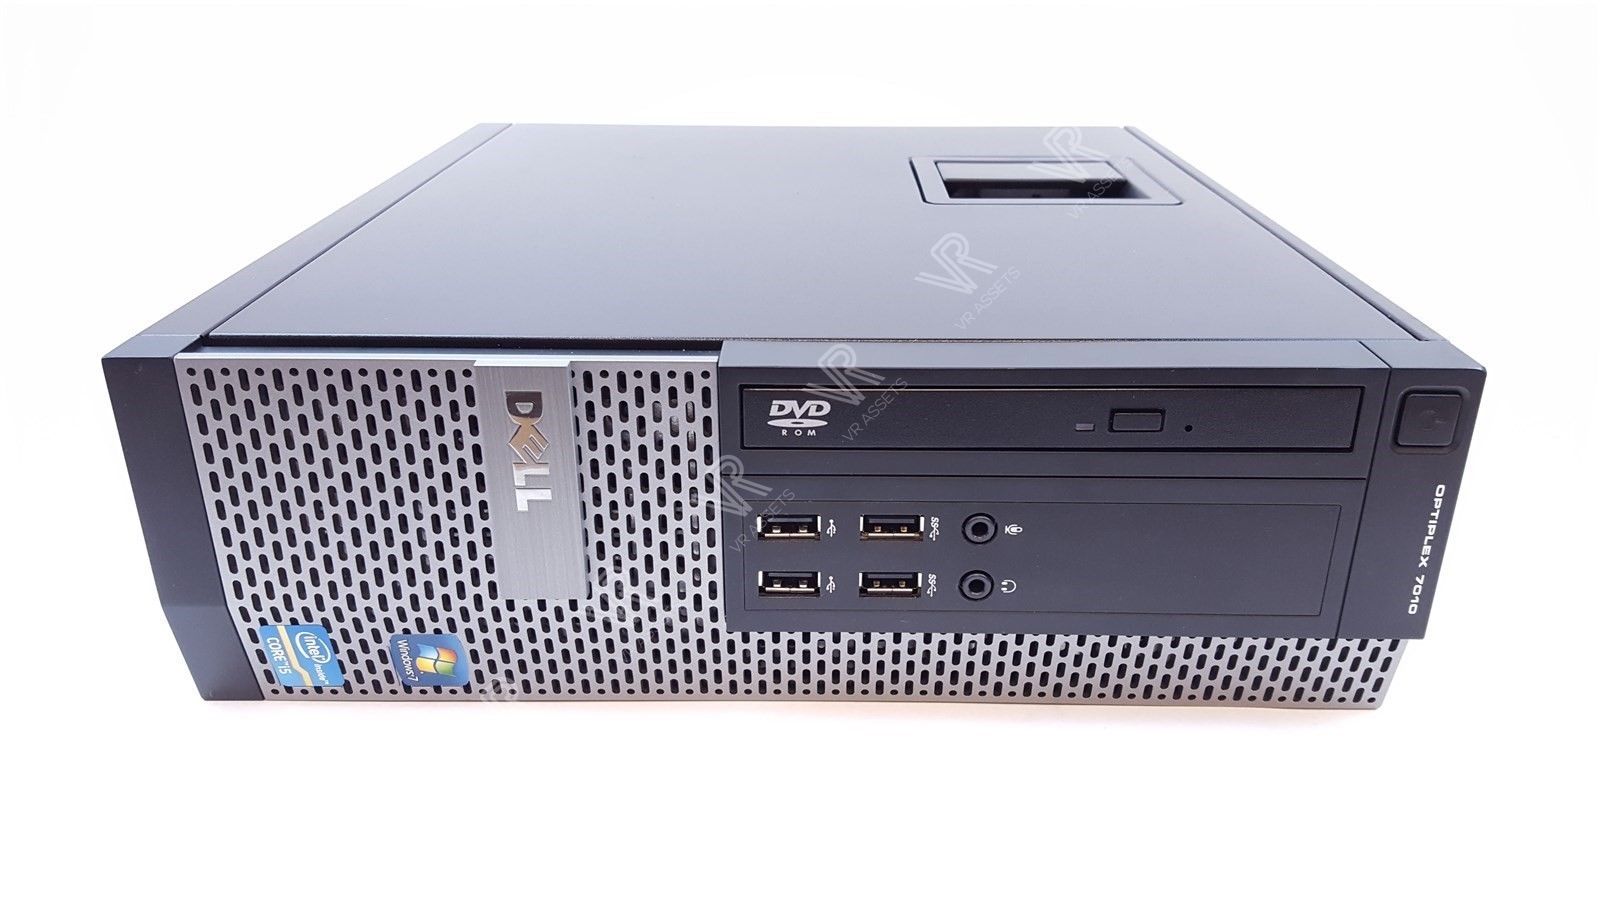 Dell Optiplex 7010 SFF I5-3570 Quad Core 4Gb 250Gb DVDRW Widows 10 Pro Desktop